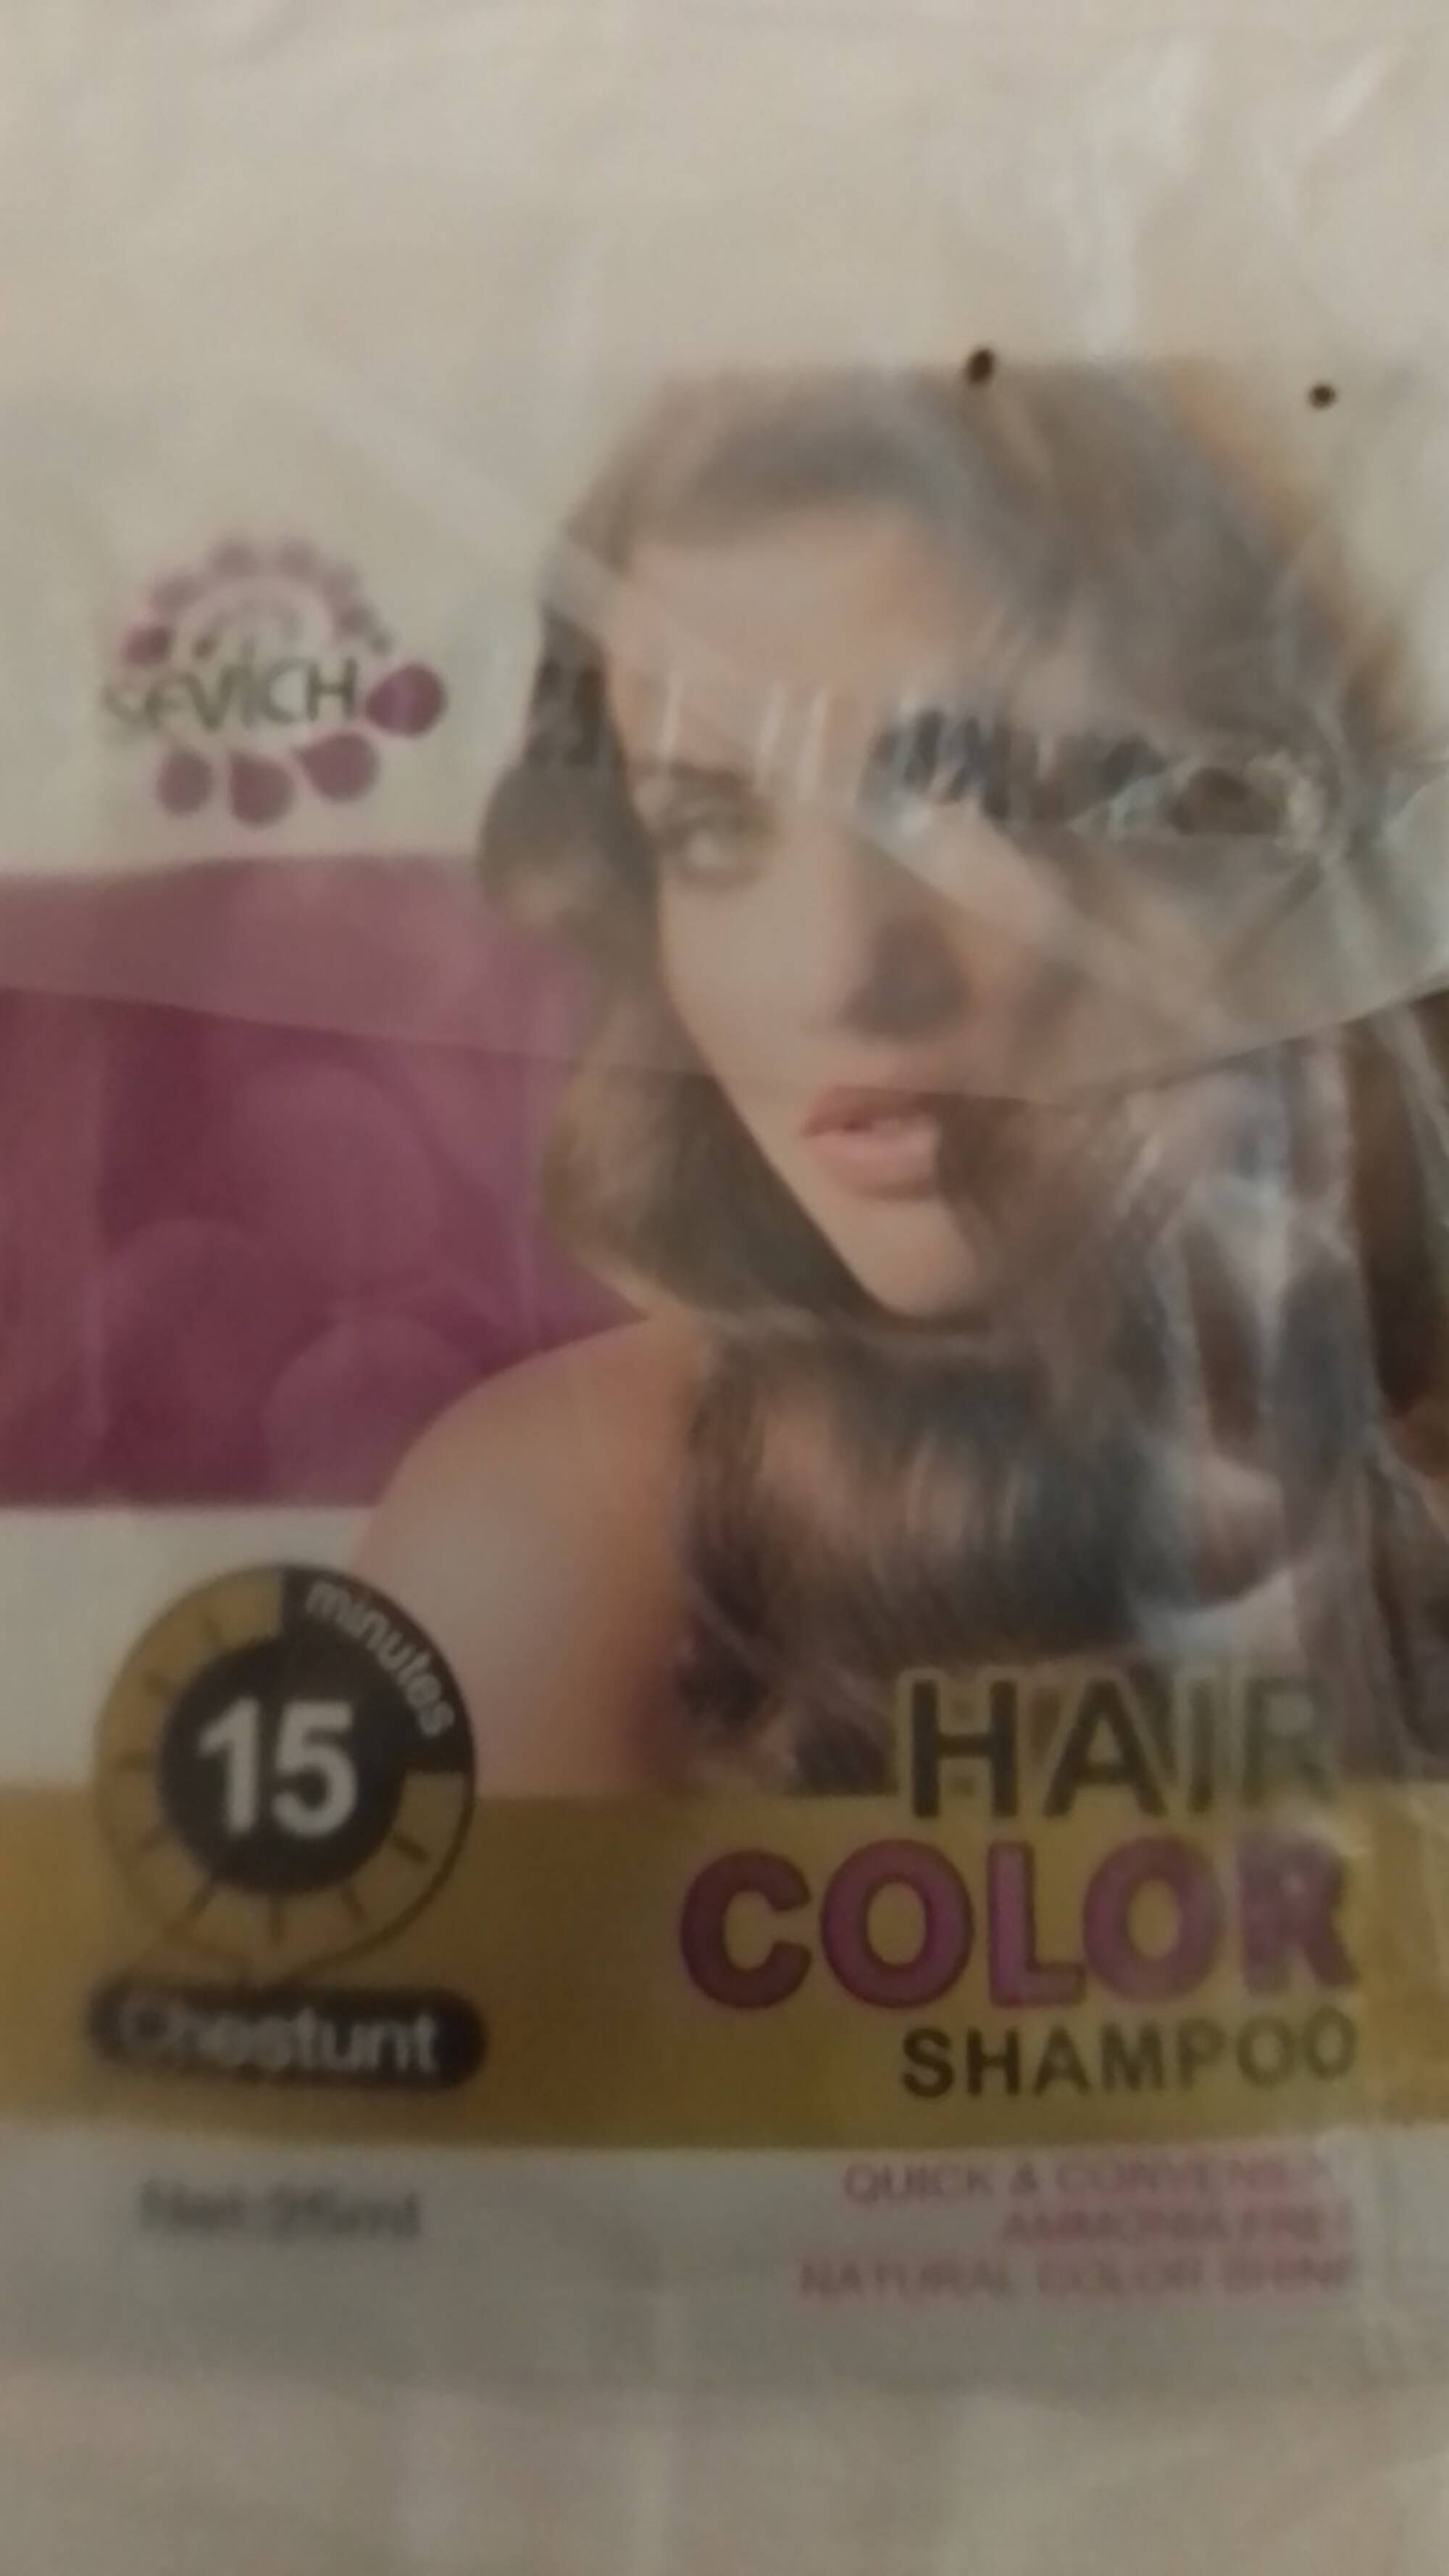 SEVICH - Hair color shampoo - Chestunt